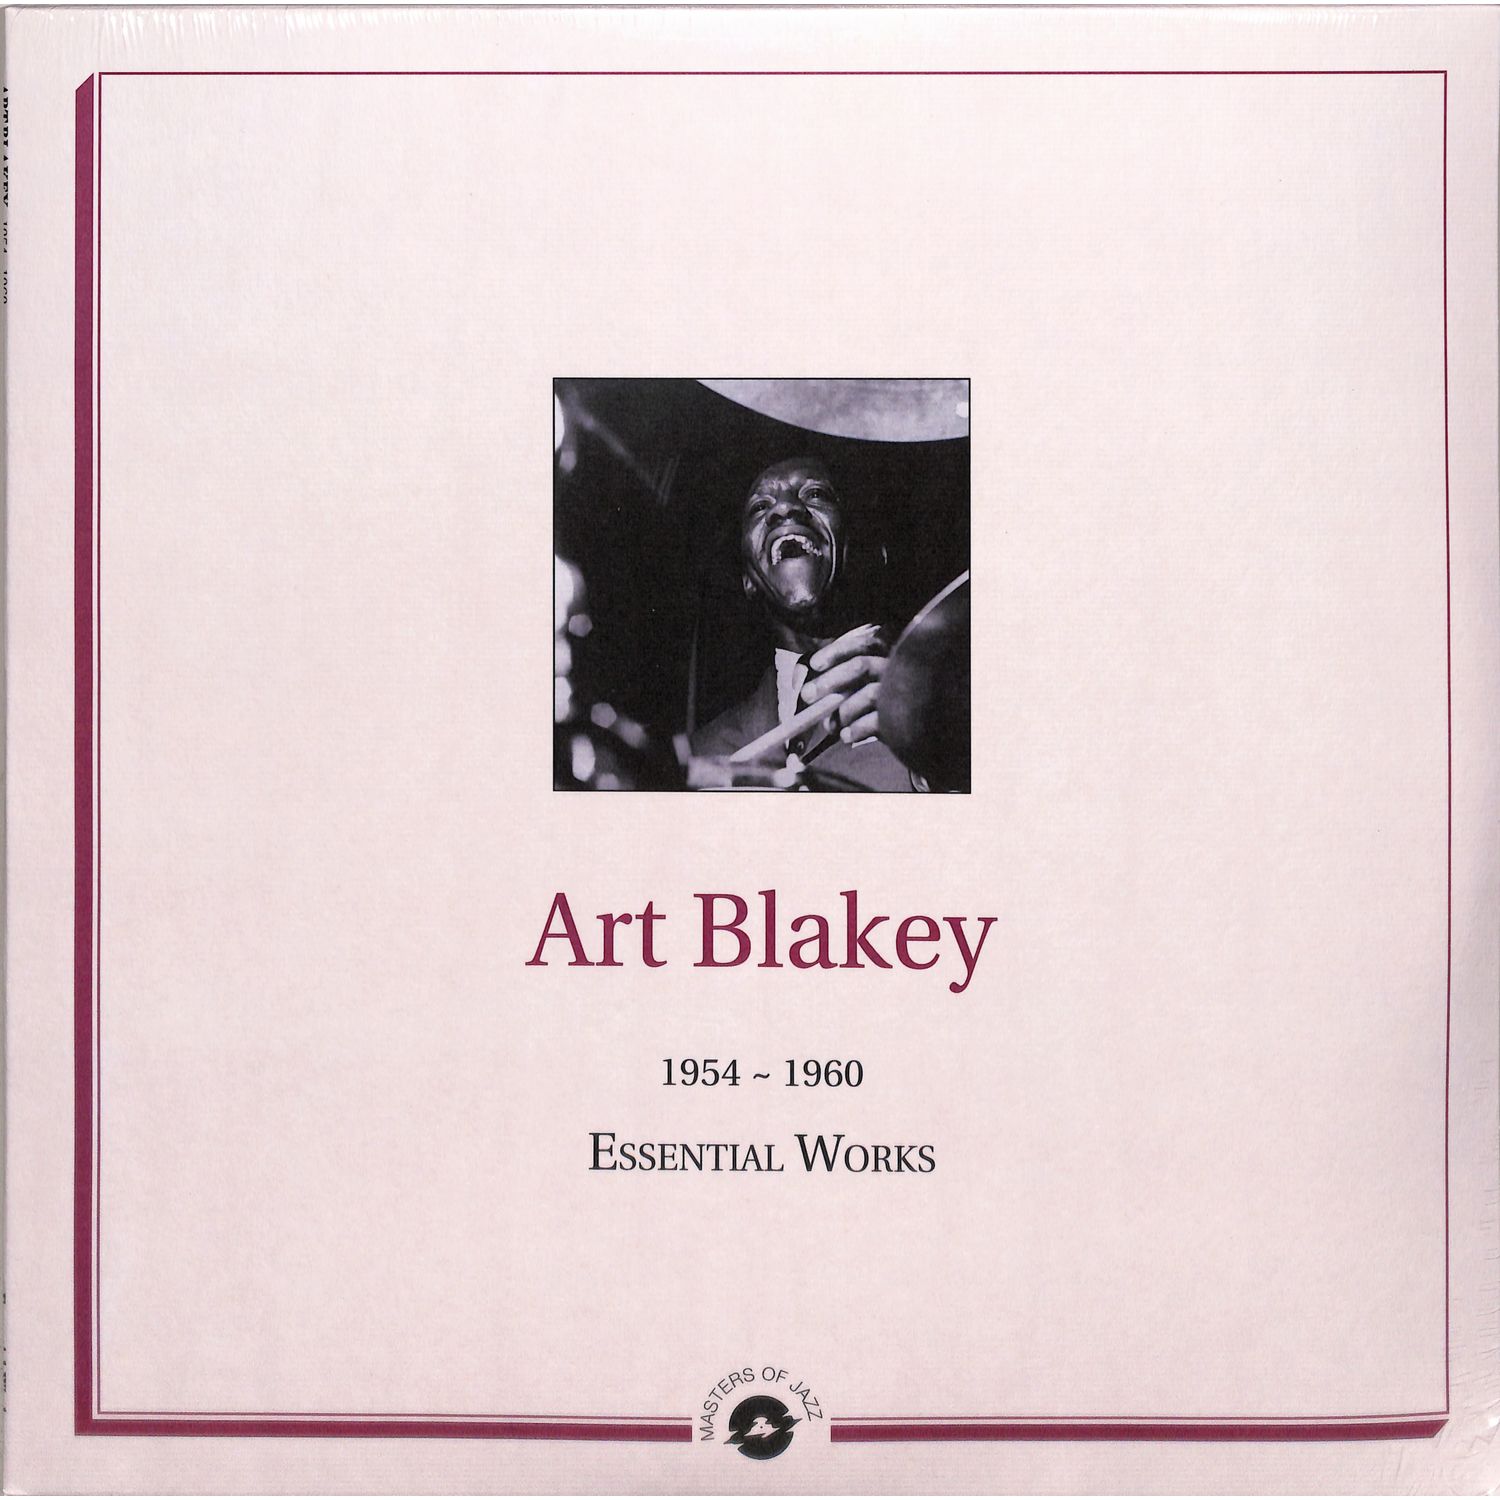  Art Blakey - ESSENTIAL WORKS: 1954-1960 